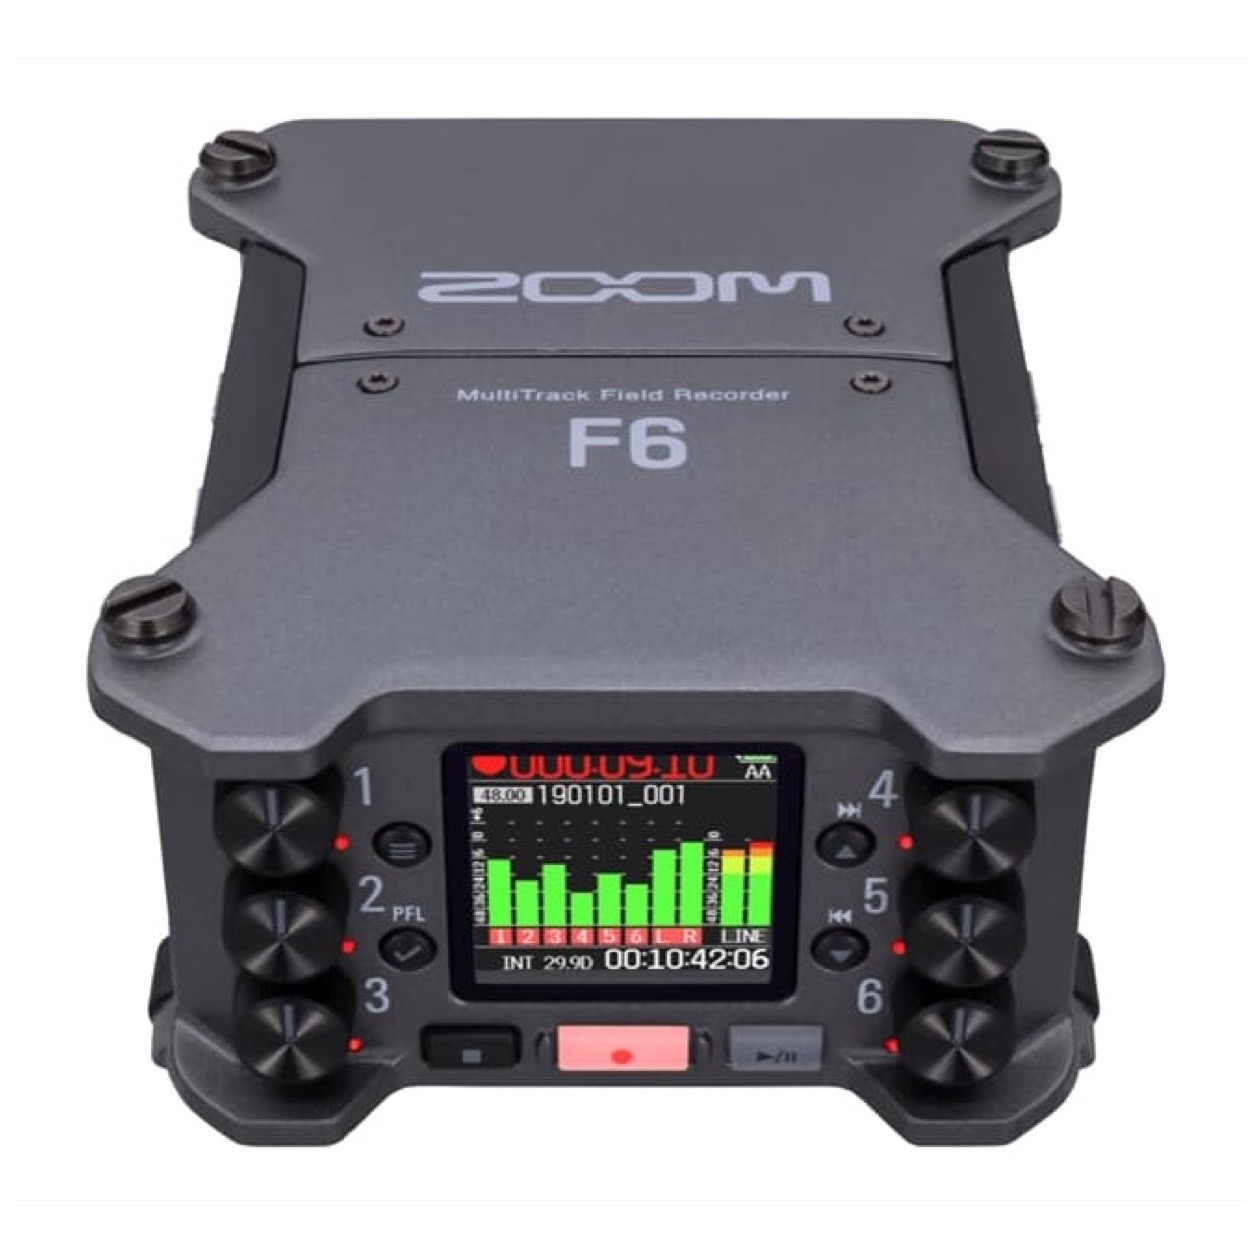 Zoom F 6 / F6 MultiTrack Field Recorder